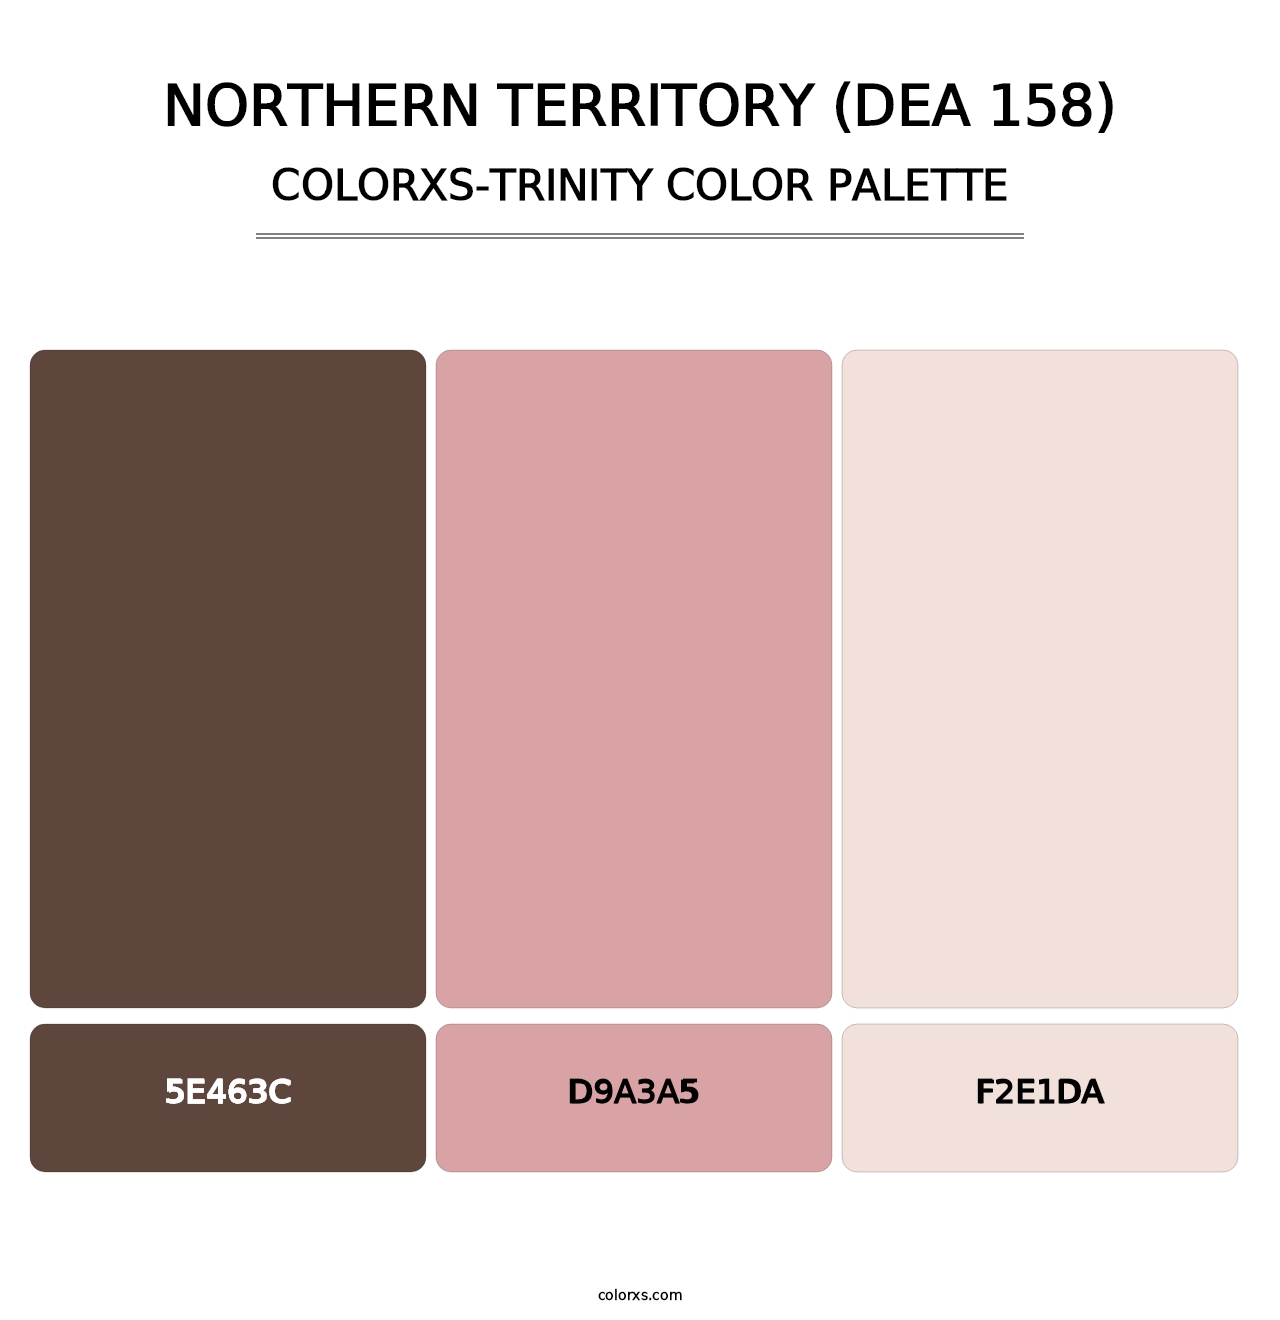 Northern Territory (DEA 158) - Colorxs Trinity Palette